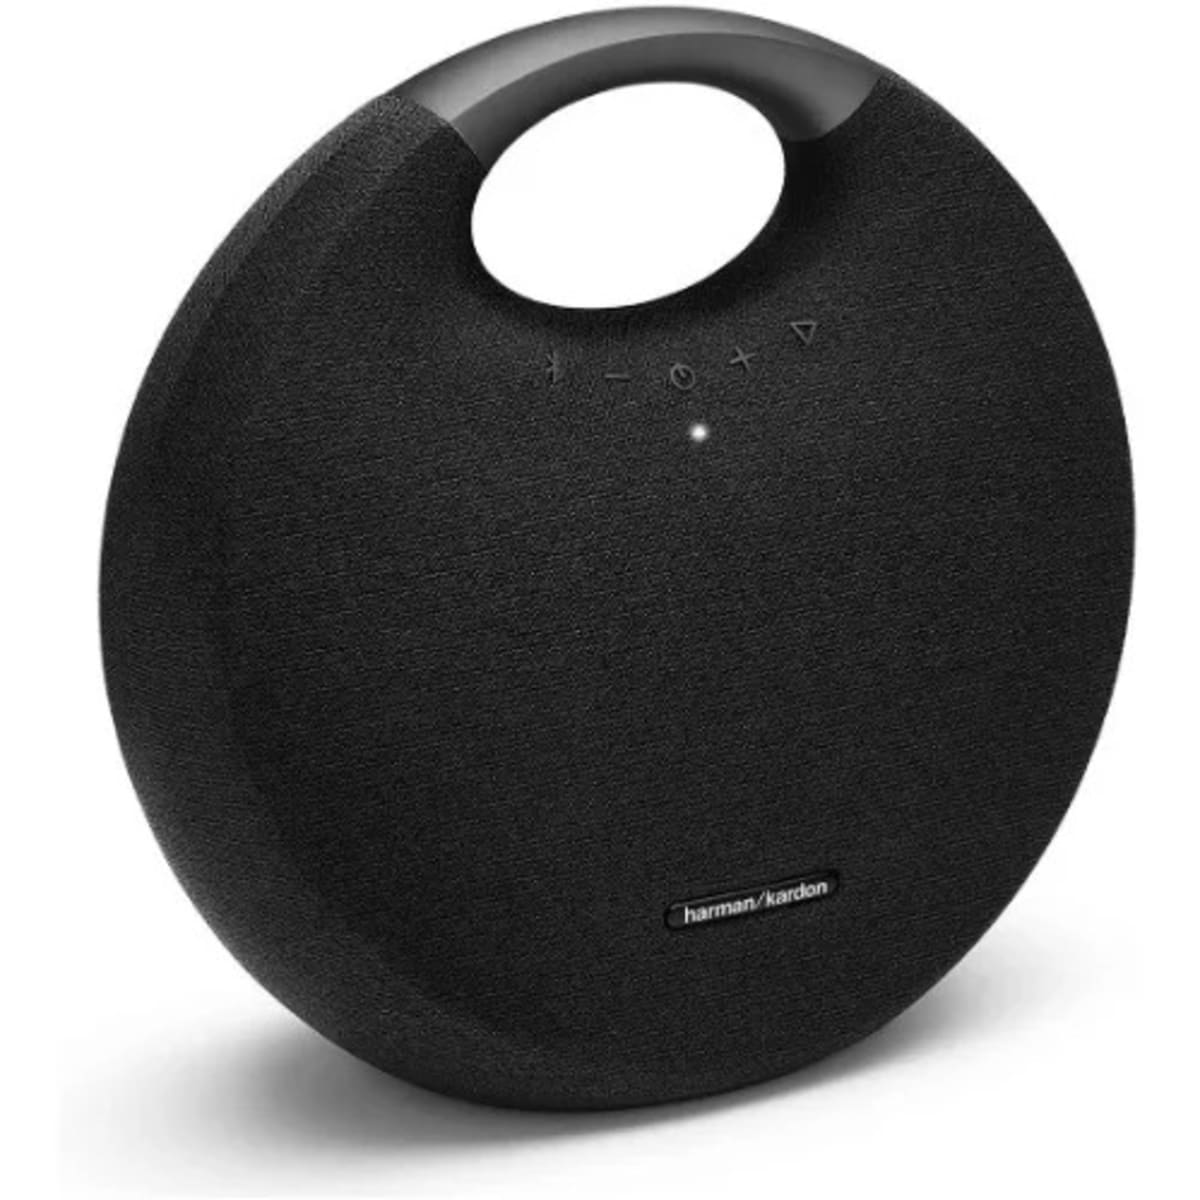 Harman Kardon Onyx Studio 4 Portable Bluetooth Speaker - Black 28292280467